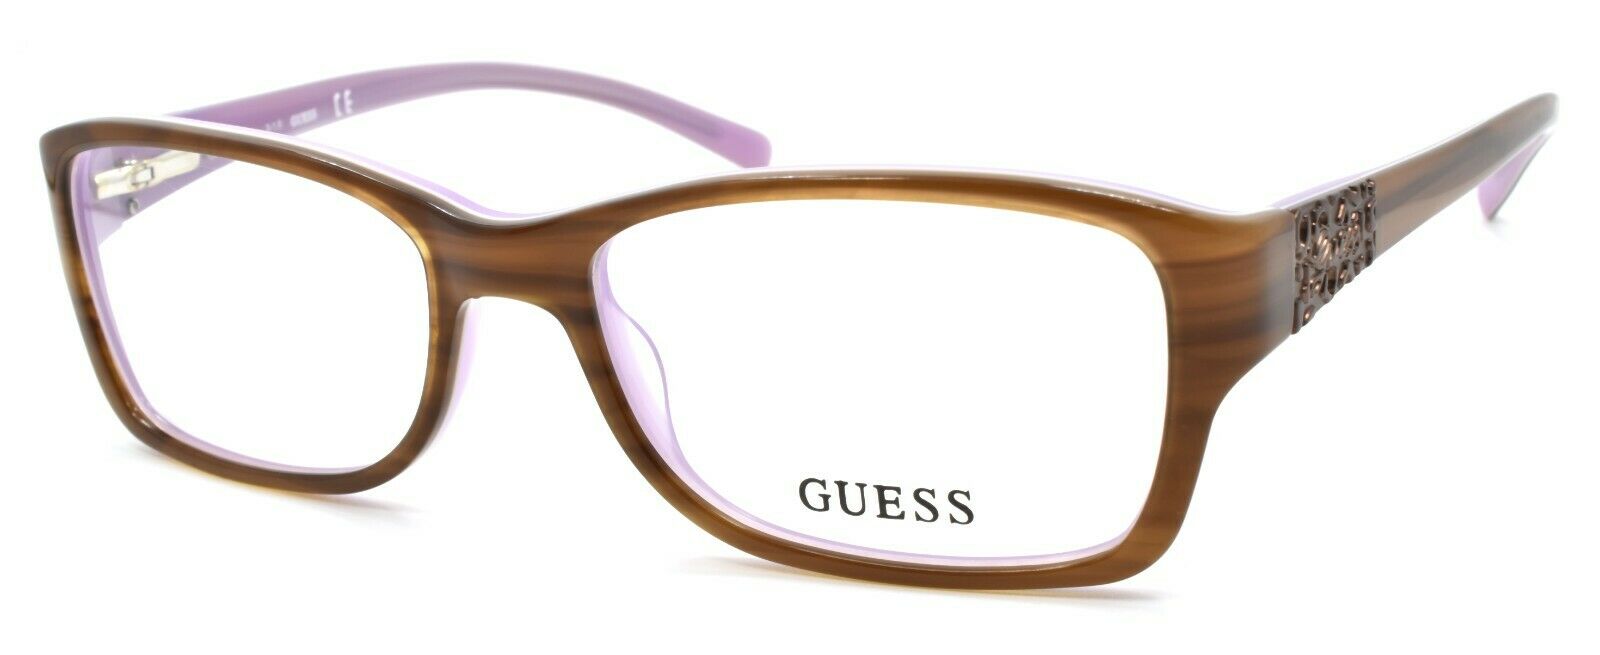 1-GUESS GU2274 AMB Women's Eyeglasses Frames 52-16-135 Amber / Lilac-715583416130-IKSpecs